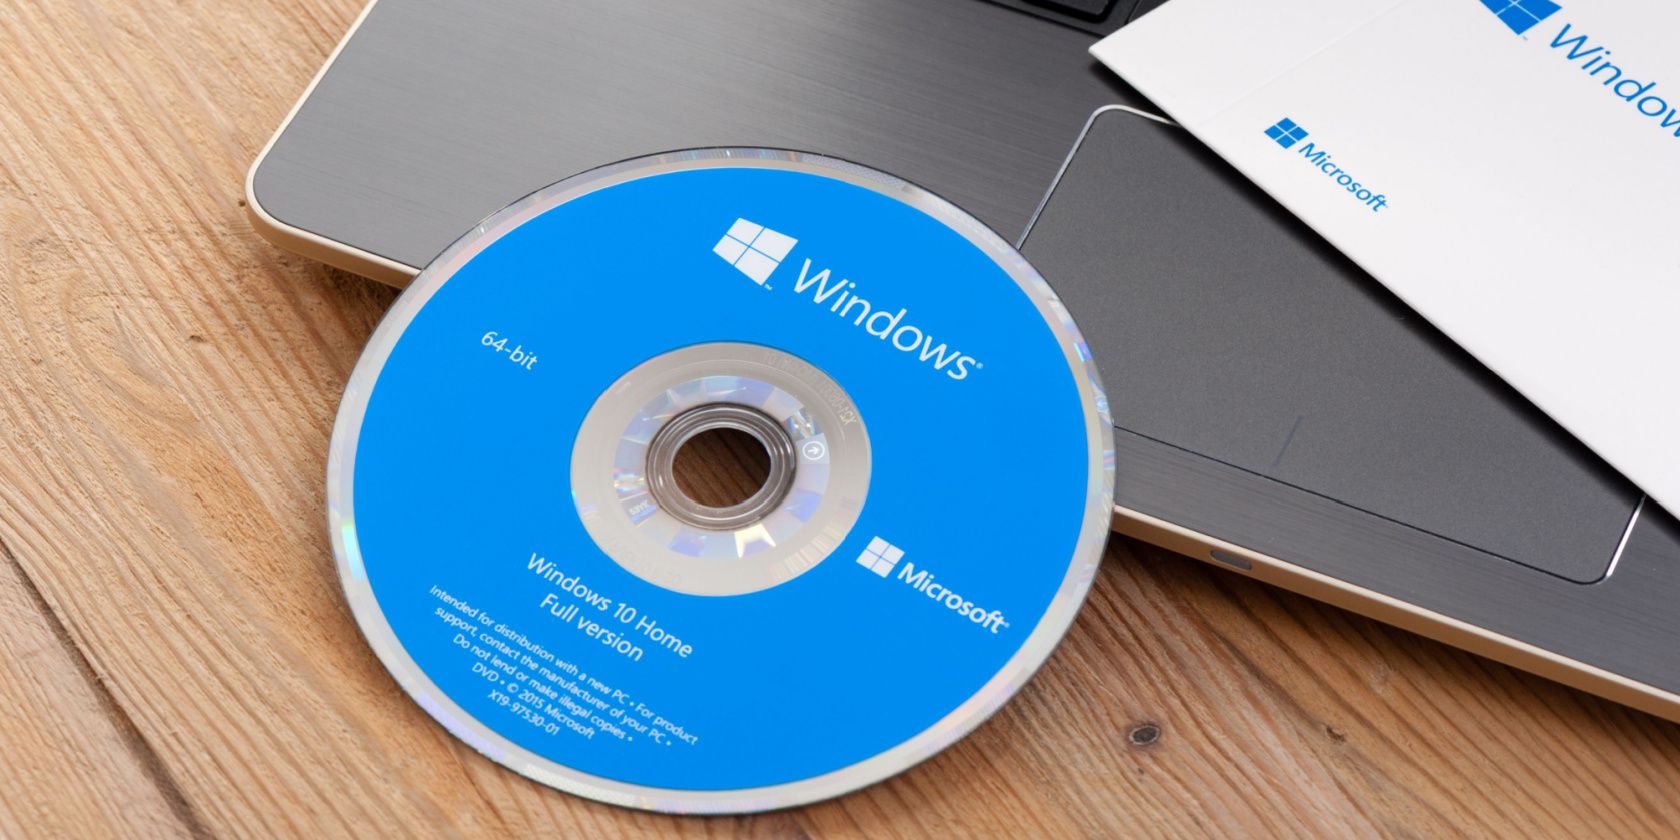 Windows 10 Install Disc on a laptop